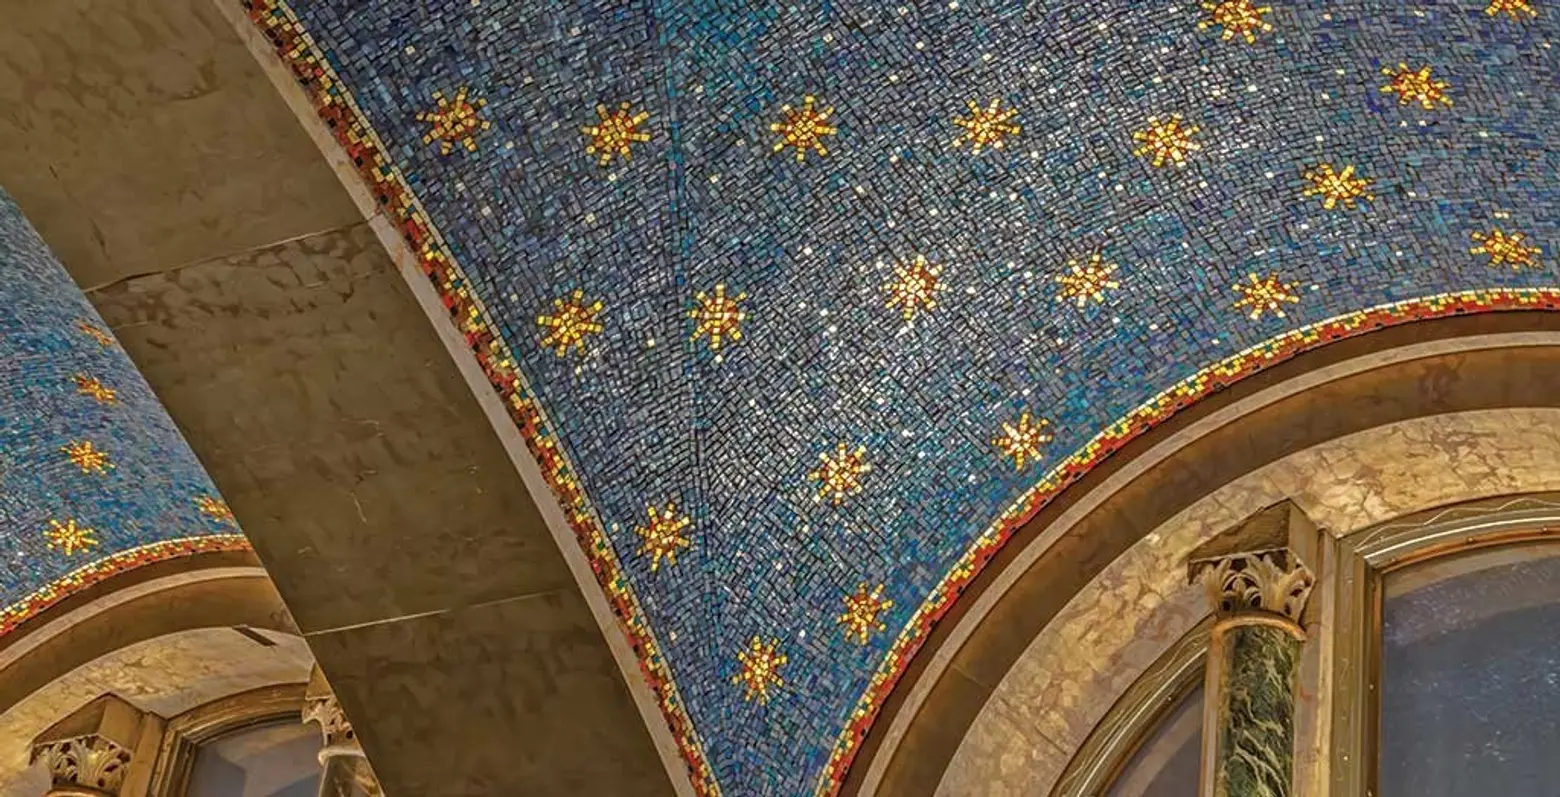 5a. Williamsburgh Savings Bank Tower, detail of blue ceiling mosaic. Photo: Larry Lederman, NYSID